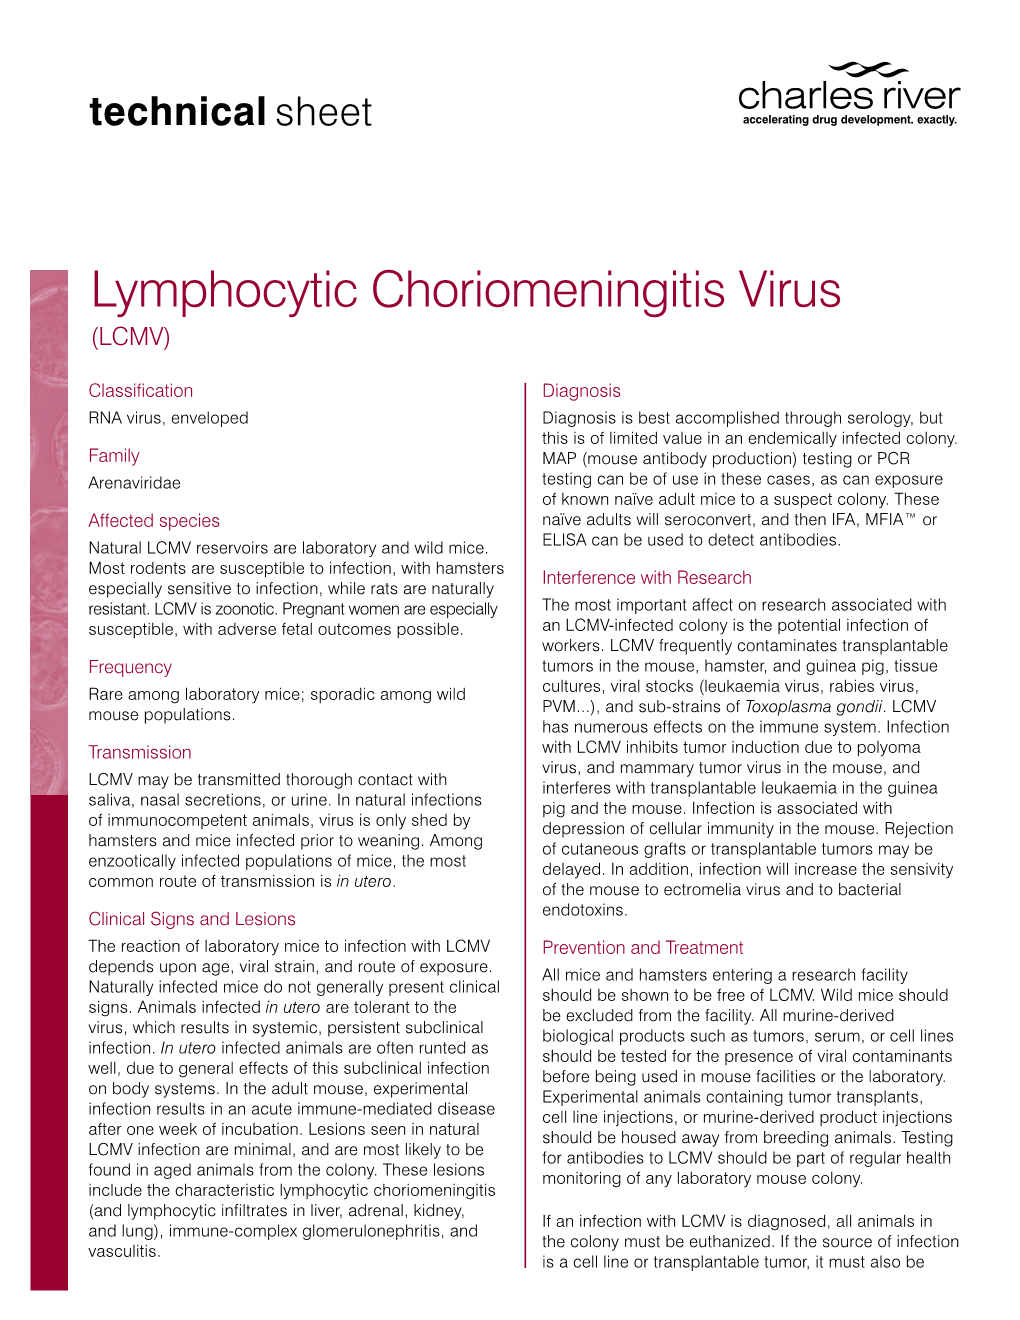 Lymphocytic Choriomeningitis Virus (LCMV)